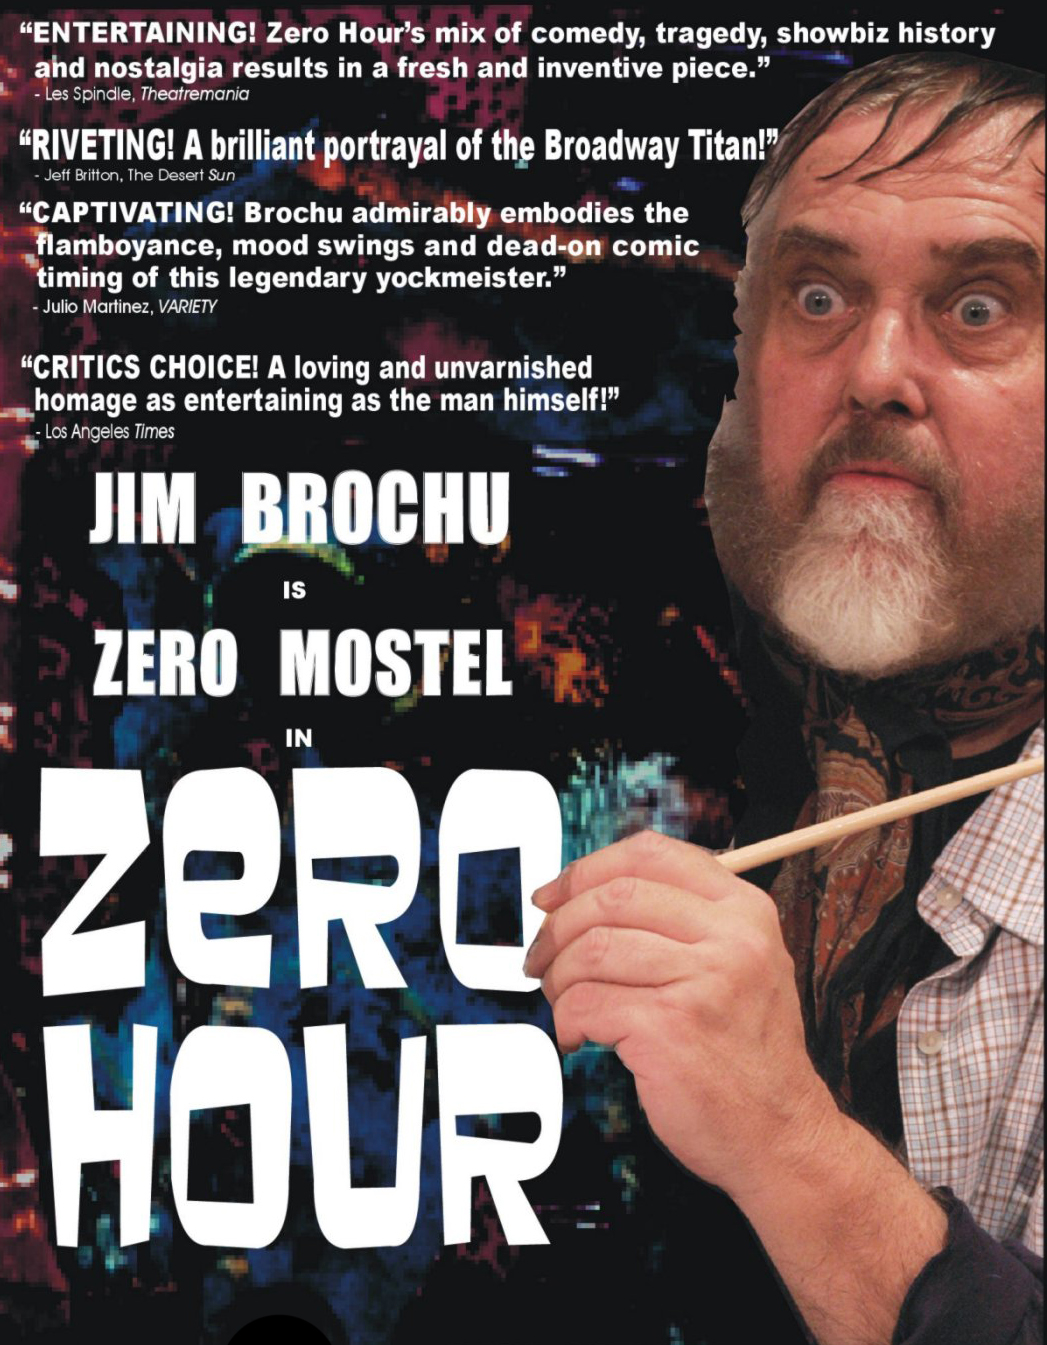 Jim Brochu, Zero Mostel